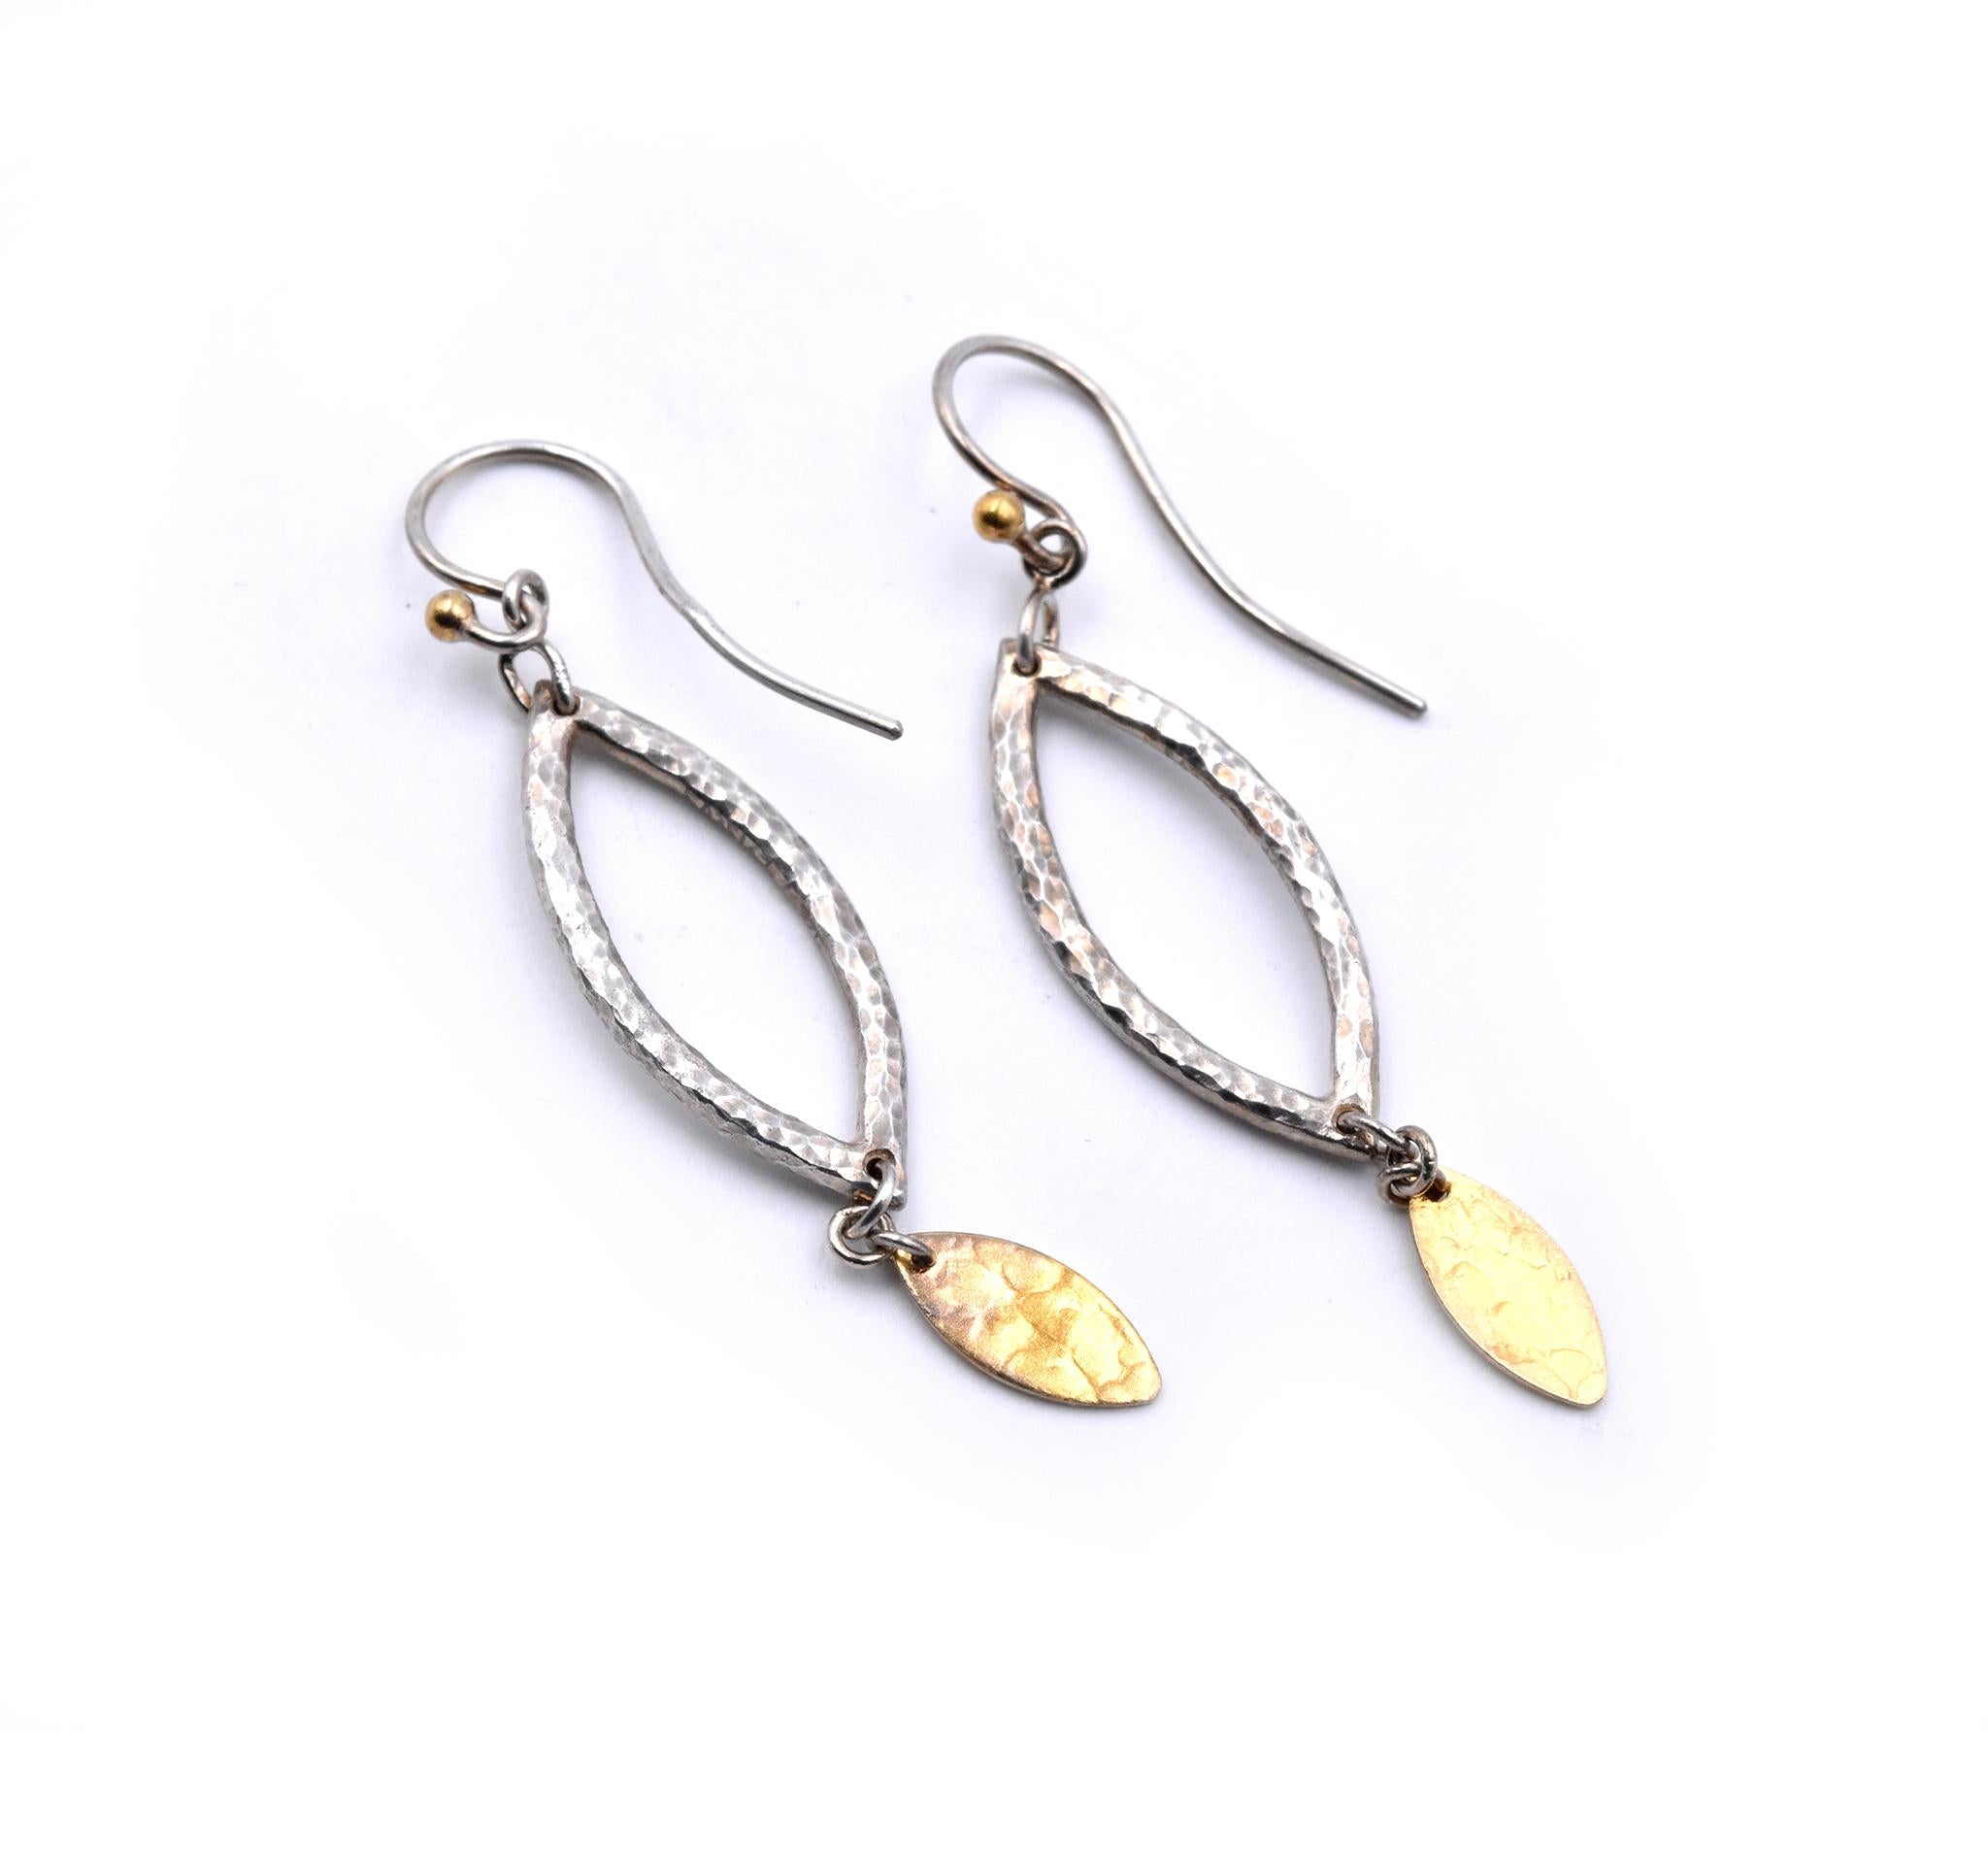 Material: sterling silver and 18k yellow gold
Dimensions: earrings measure 57.25mm x 11.55mm
Fastenings: shepherd hook
Weight: 4.3 grams
